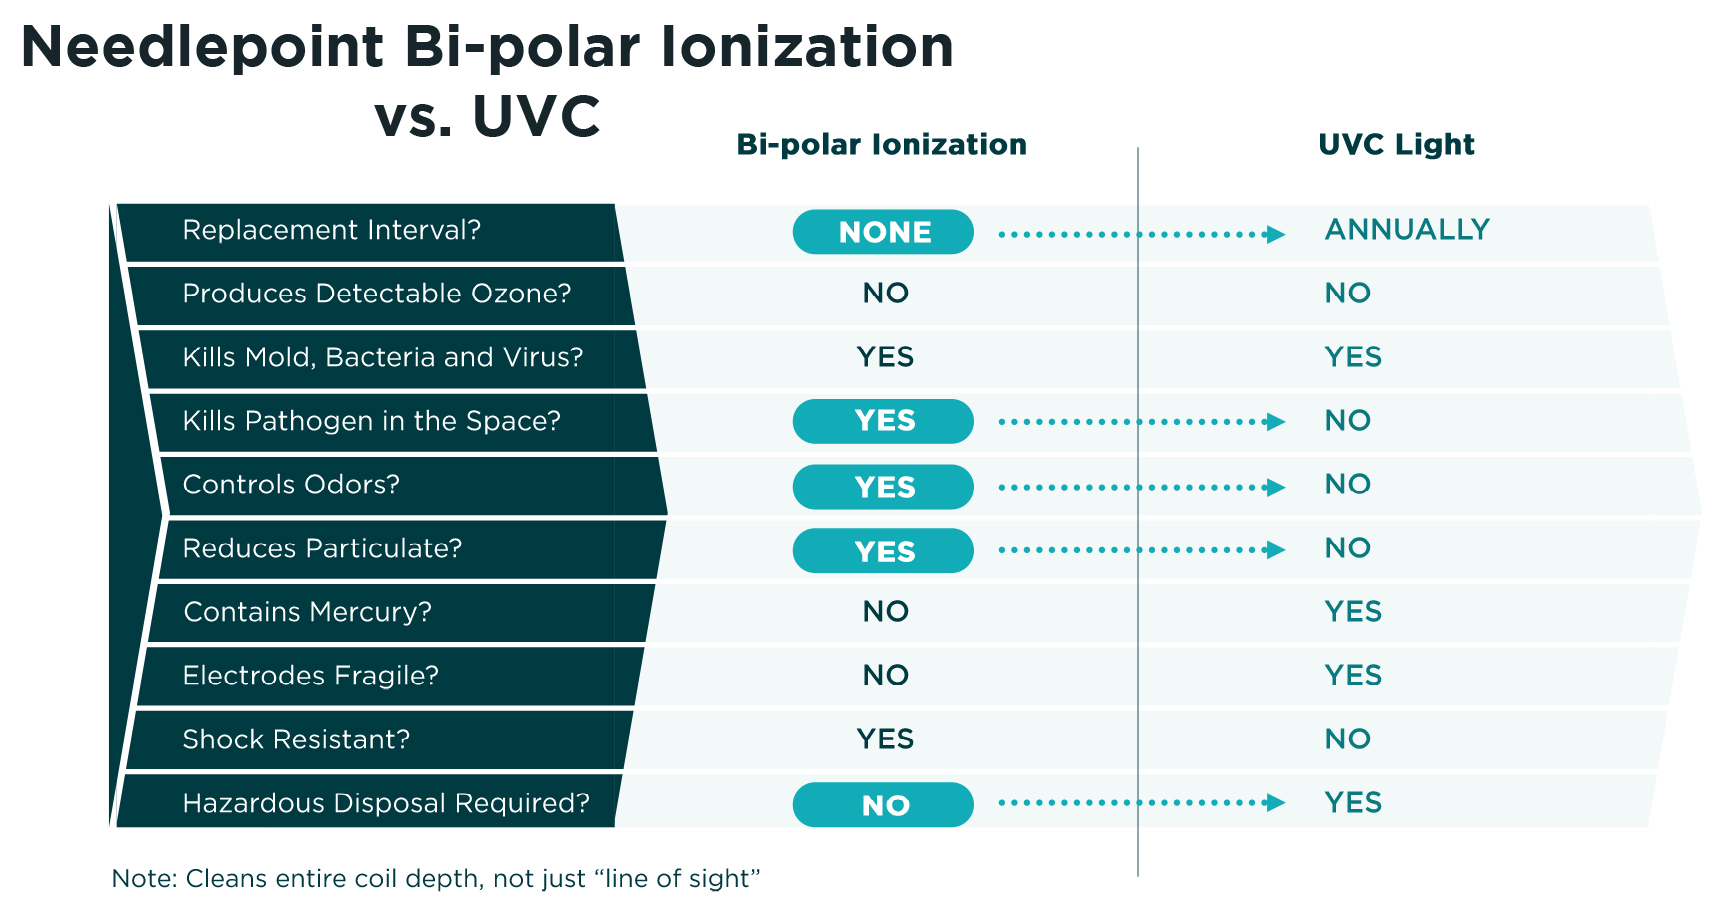 Needlepoint Bi-polar Ionization vs. UVC